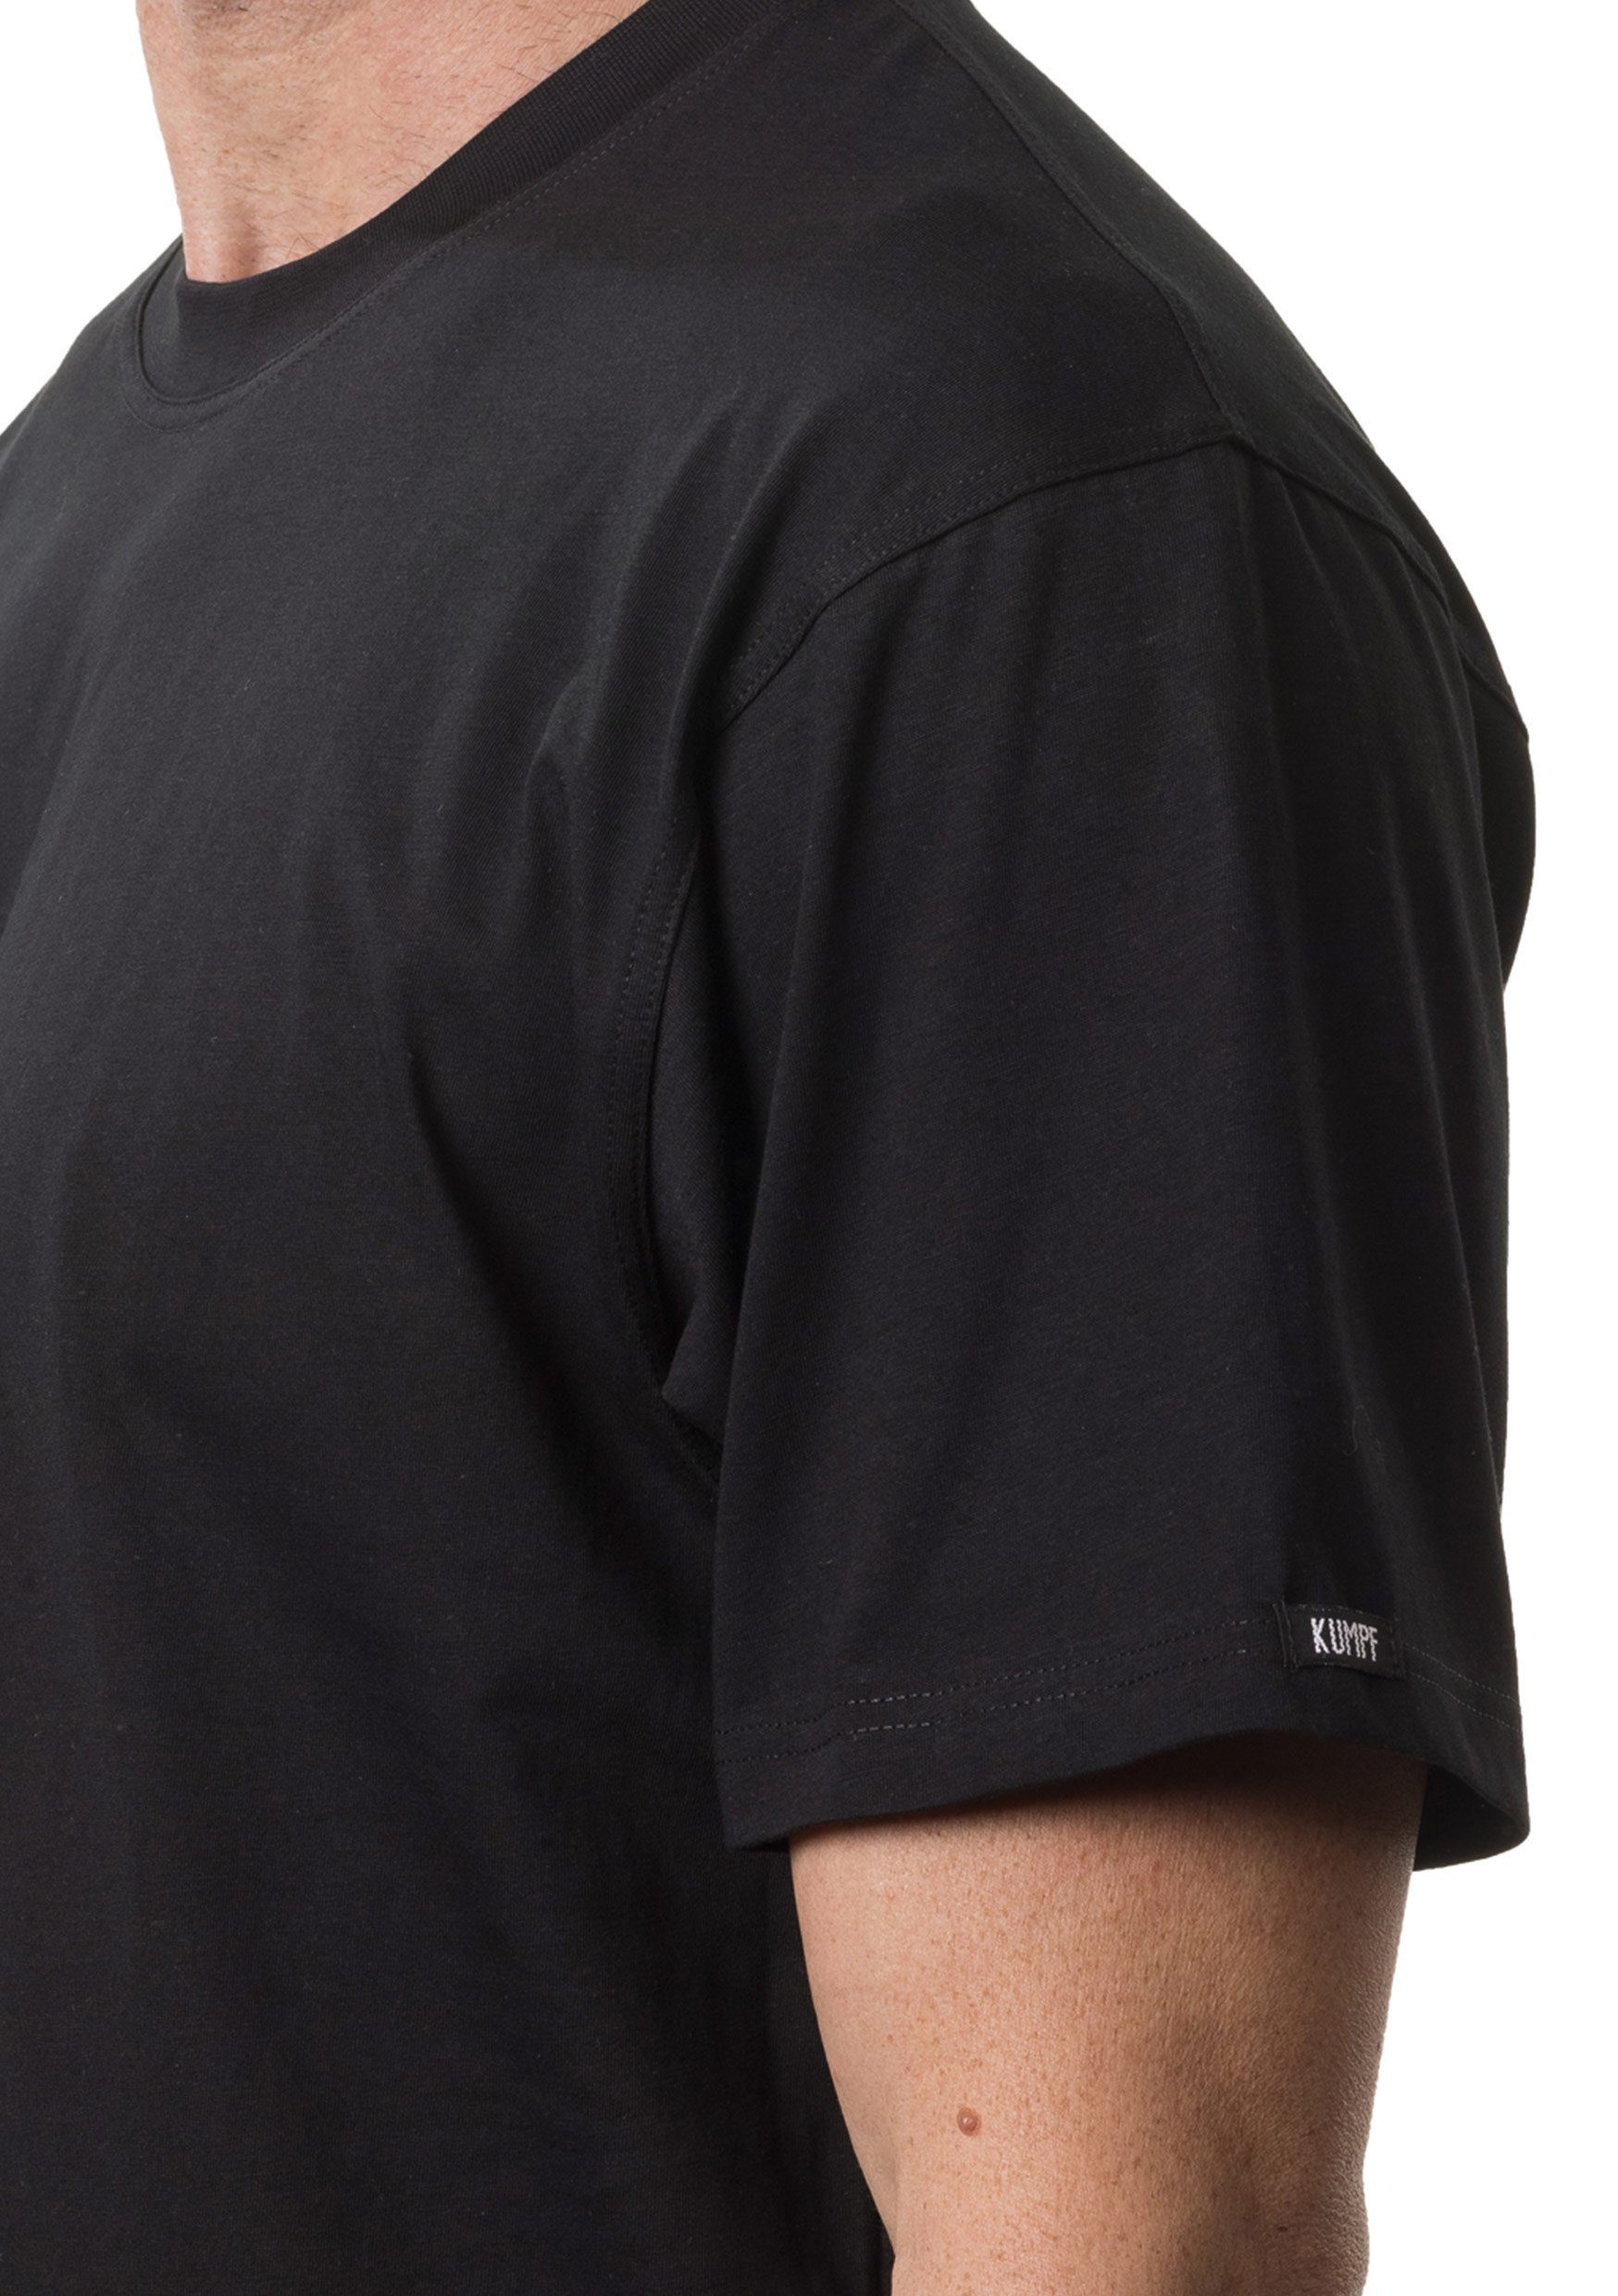 (Stück, 1/2 hohe Herren KUMPF Bio Arm Unterziehshirt 1-St) T-Shirt schwarz Markenqualität Cotton